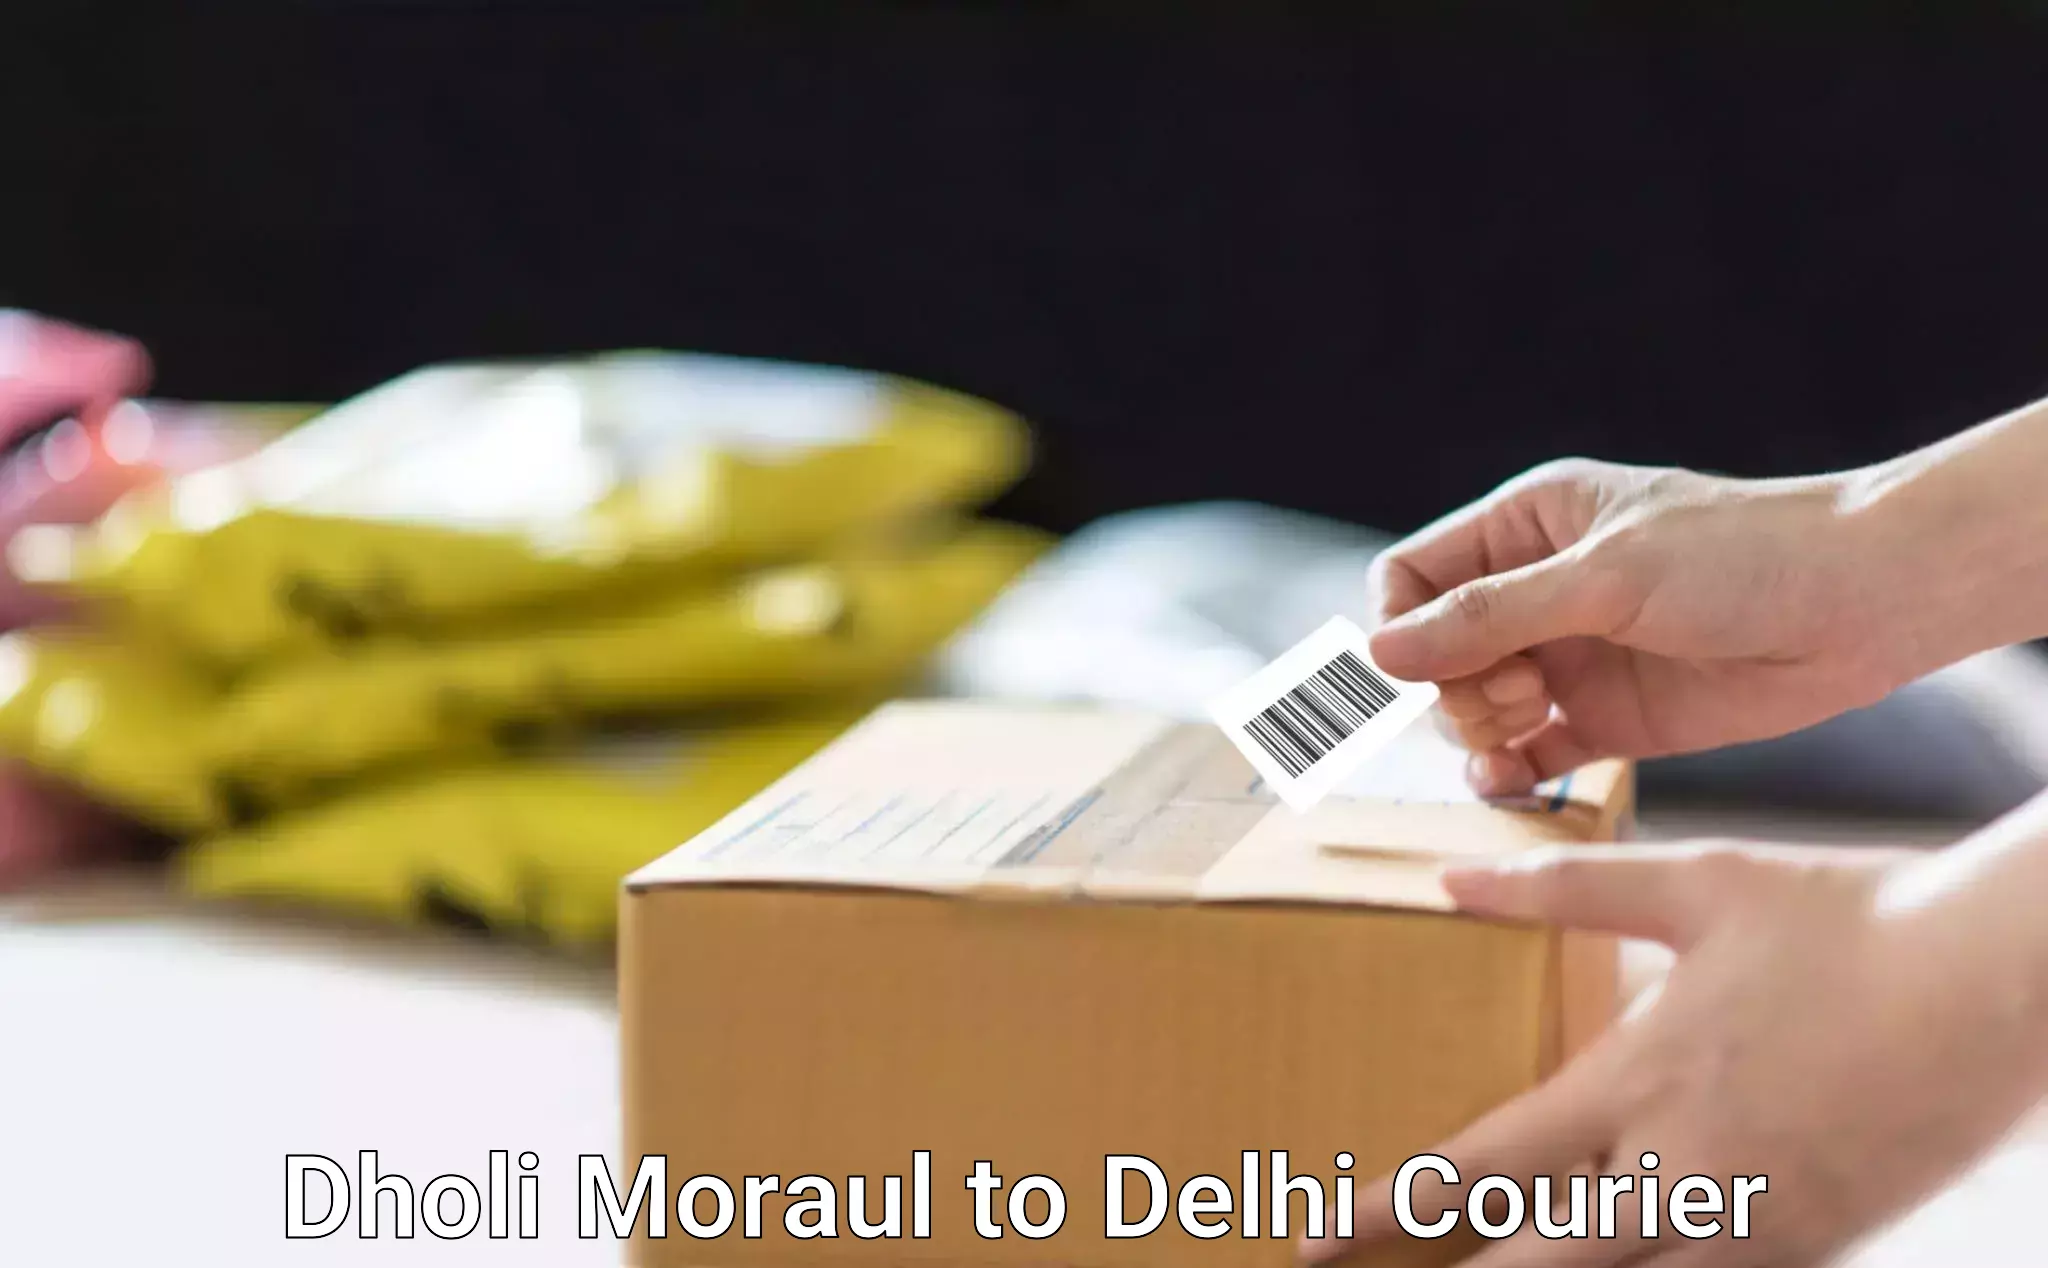 Budget-friendly movers Dholi Moraul to Delhi Technological University DTU